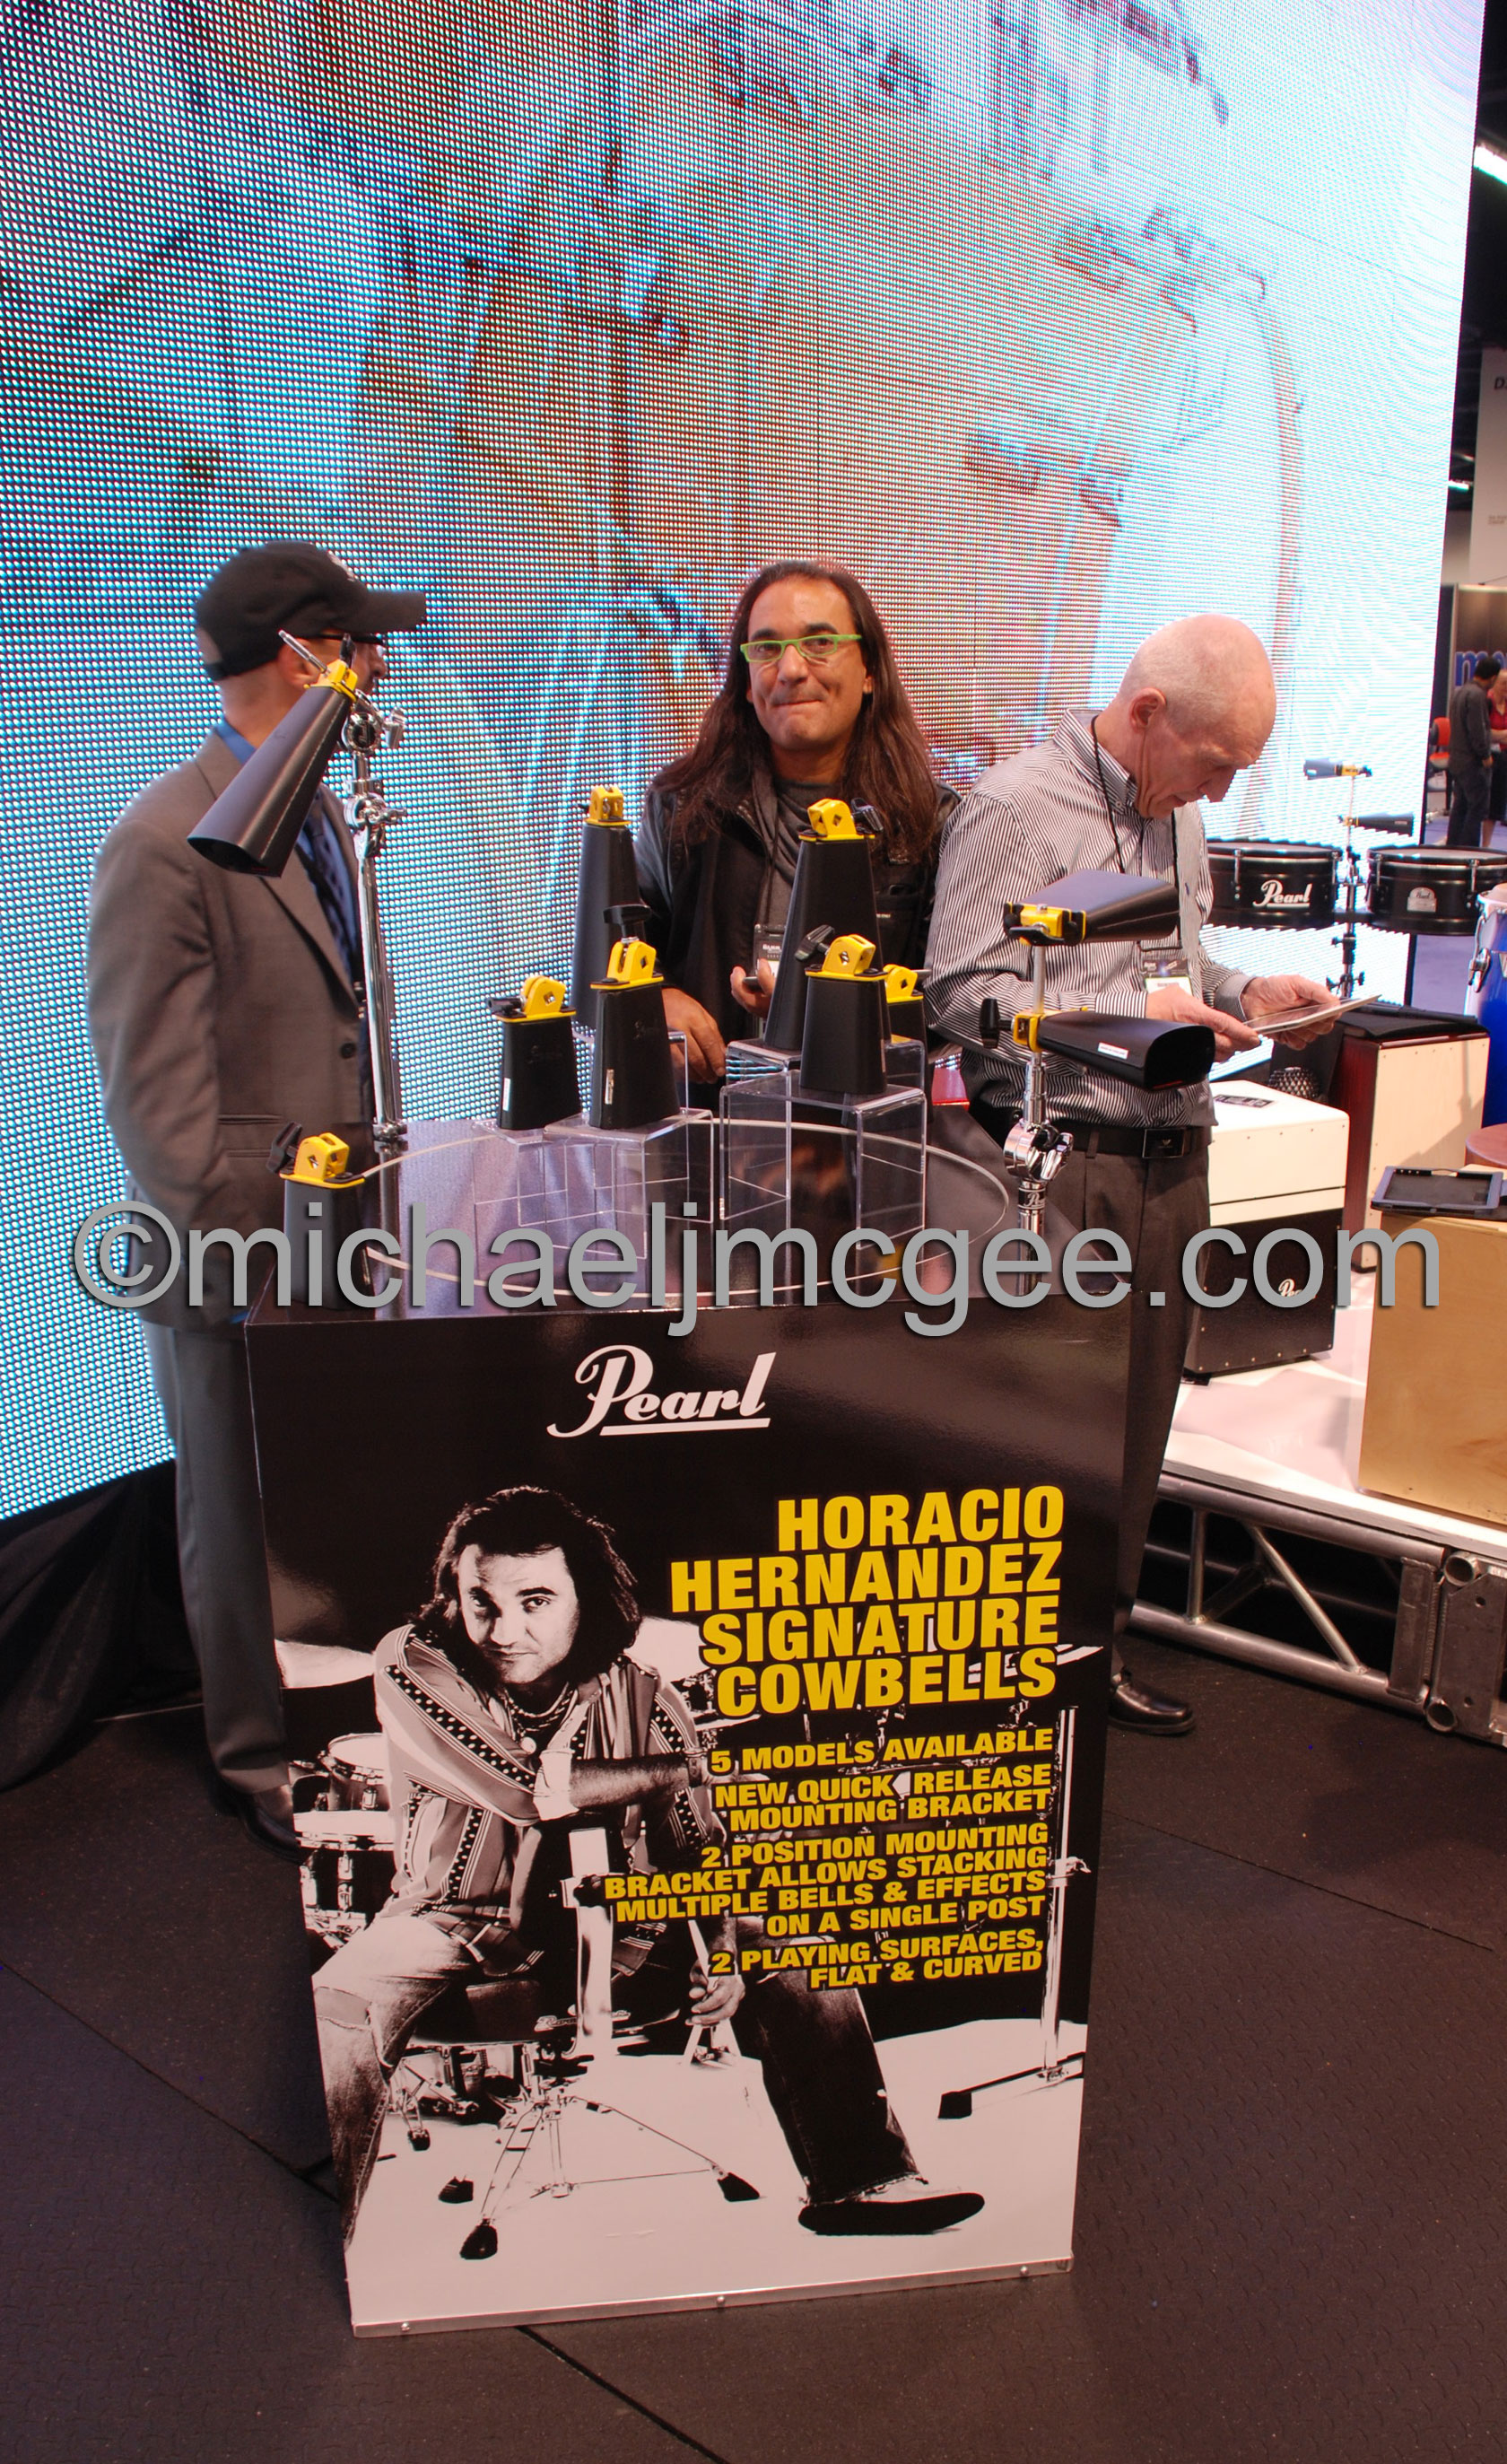 Horacio "El Negro" Hernandez / michaeljmcgee.com